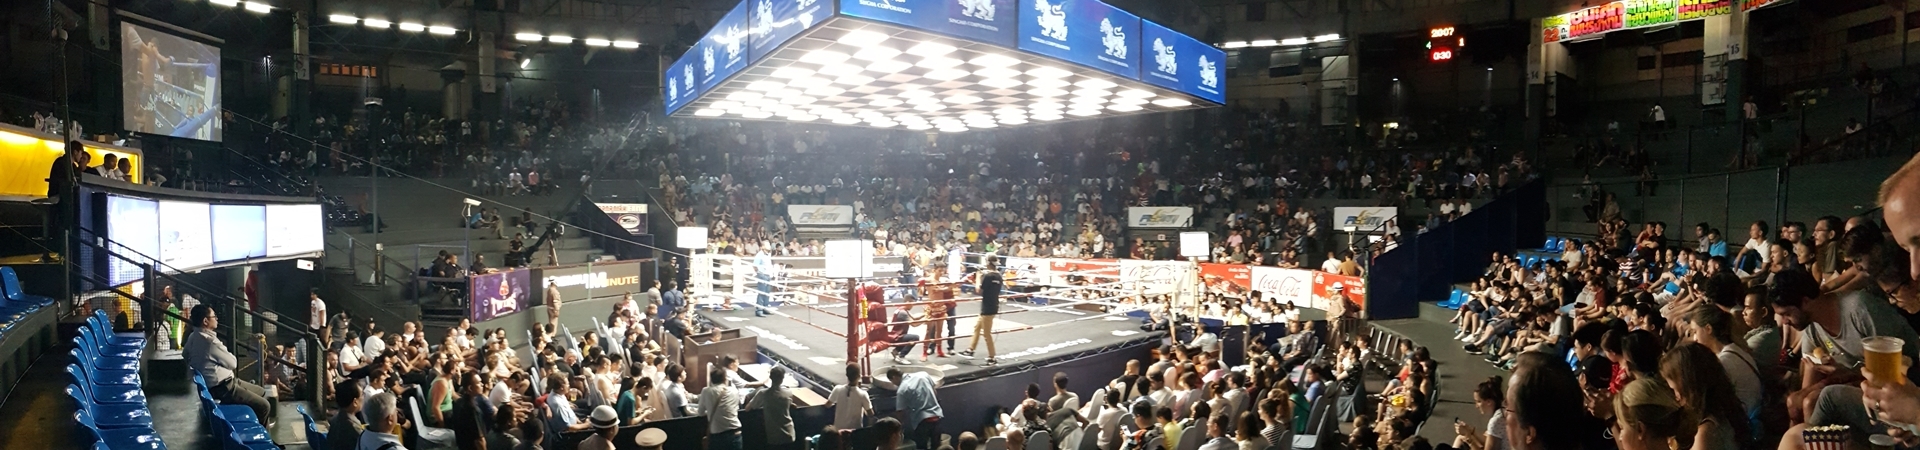 Image of Thai Boxing at Rajdamnoen